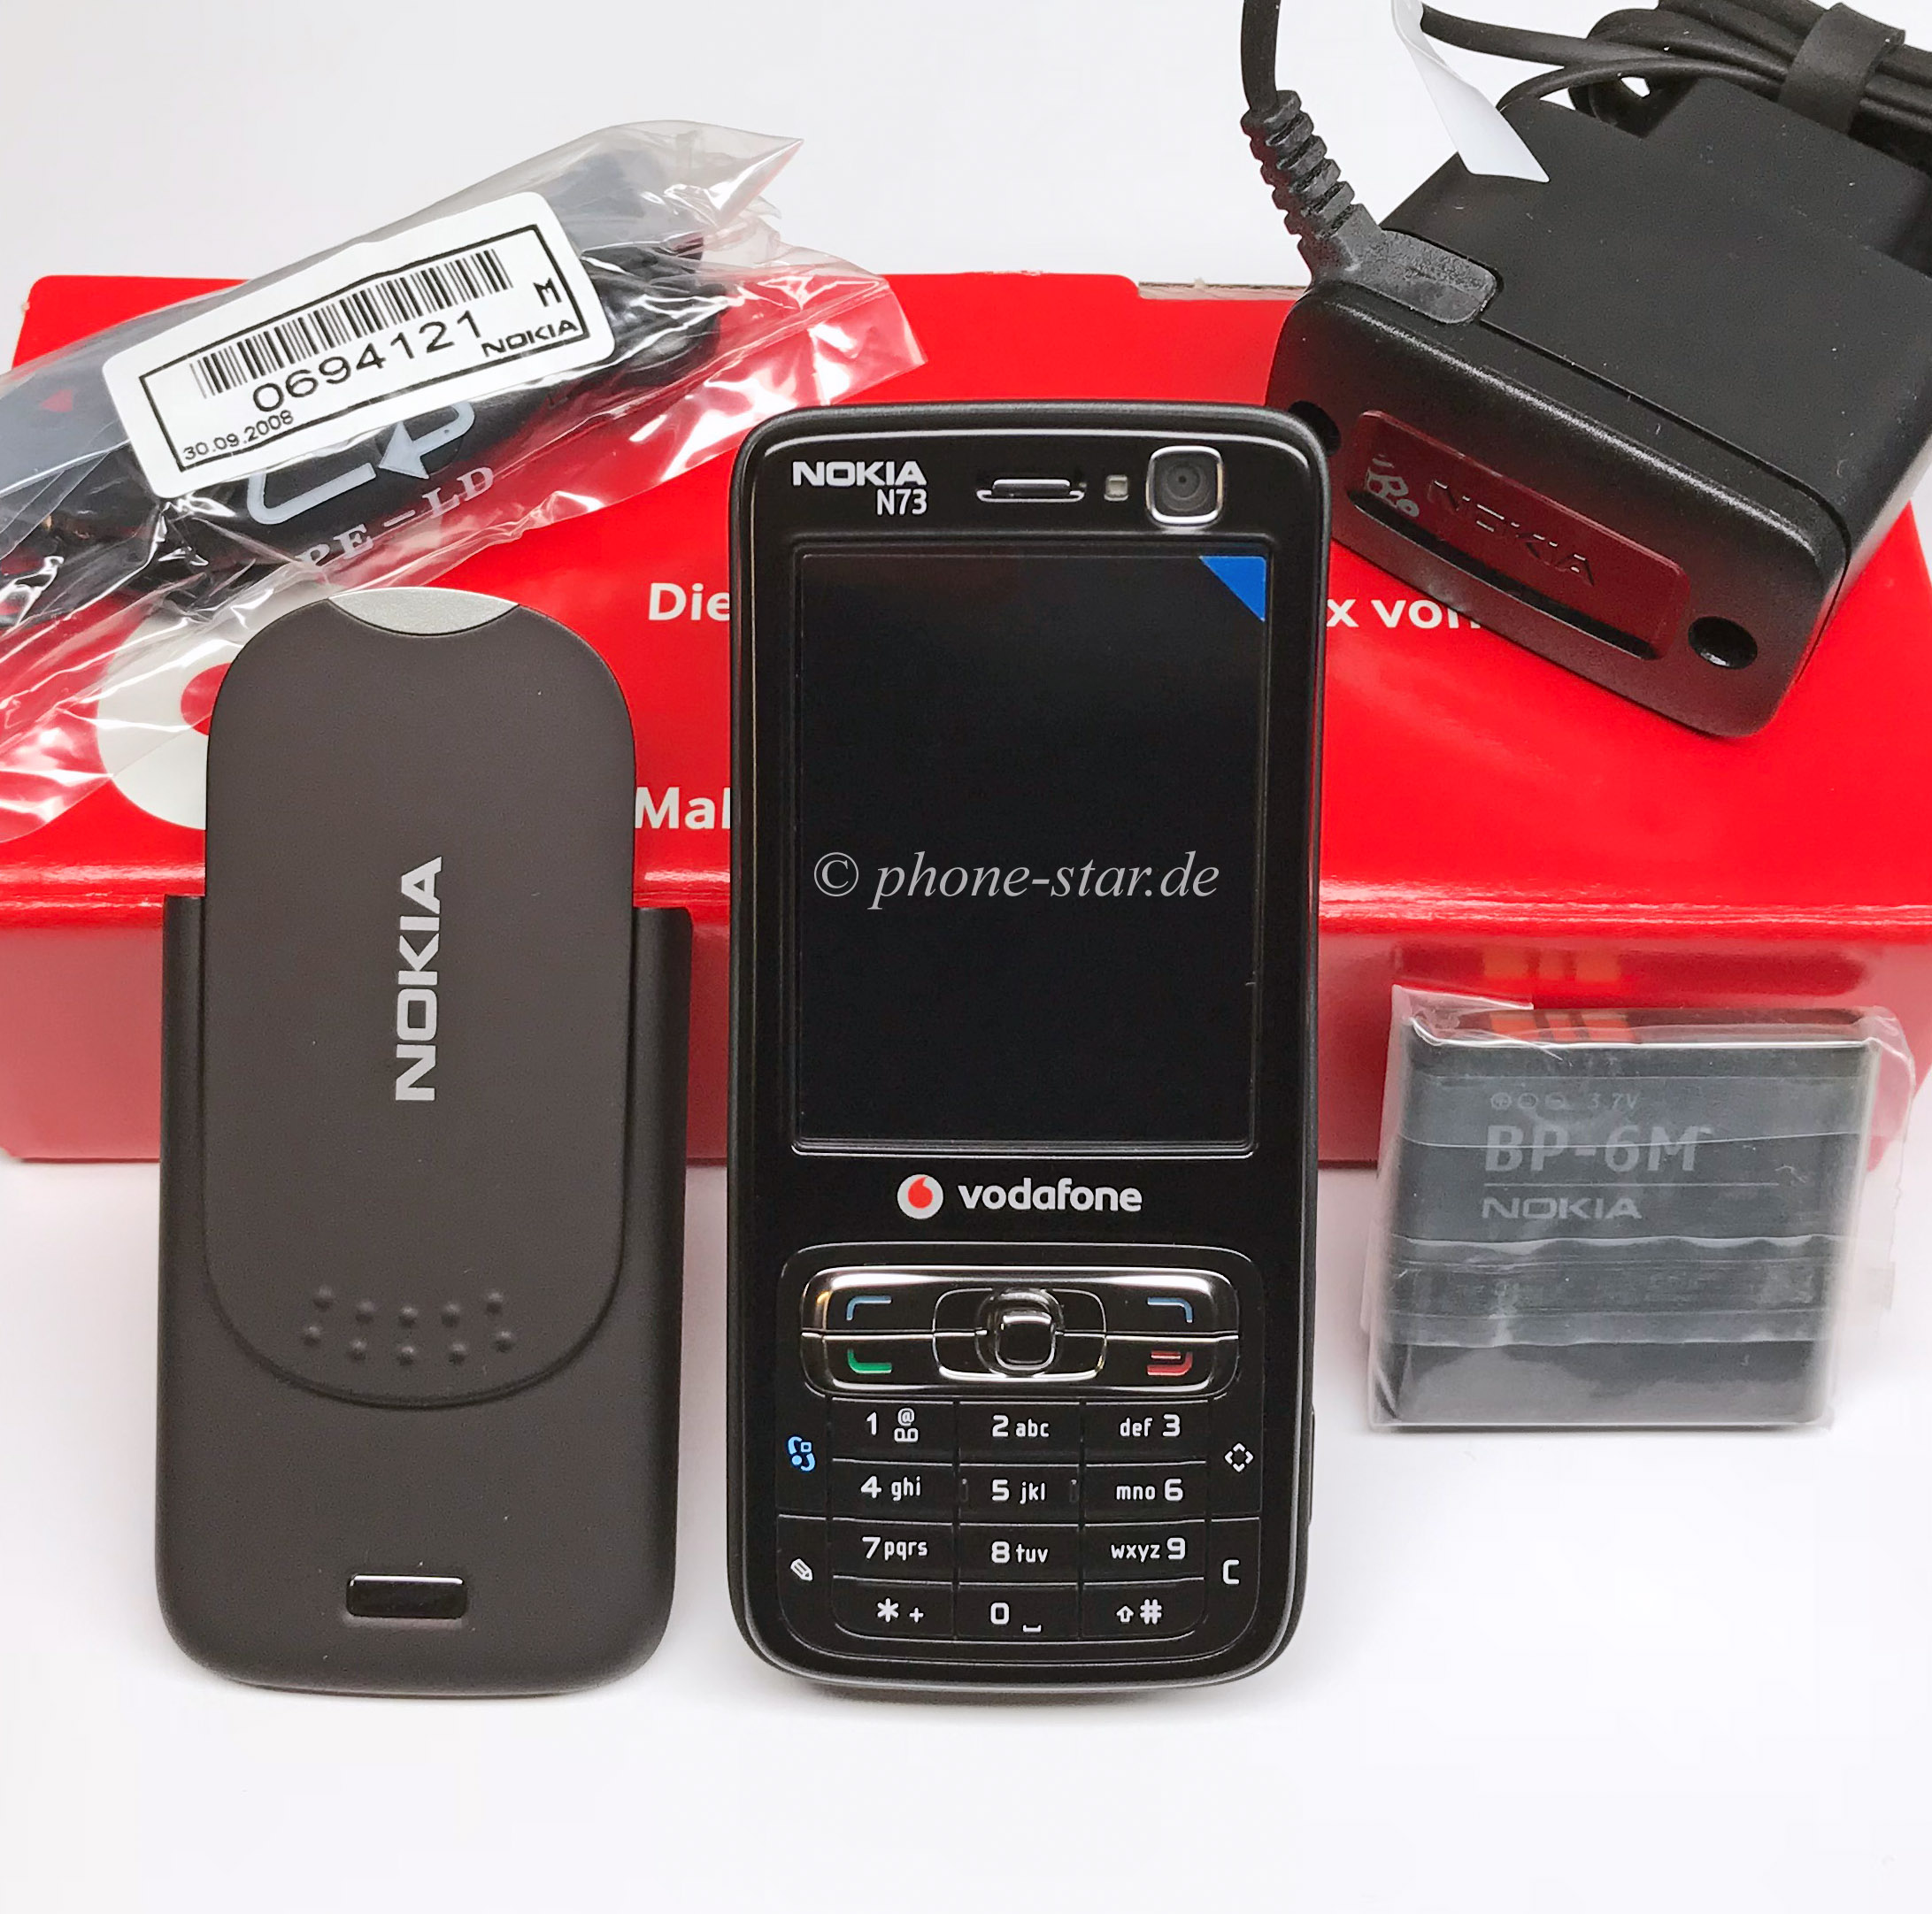 Nokia N73 RM-133 Business Tasten-Handy Smartphone Unlocked Bluetooth Kamera MP3 wie Neu